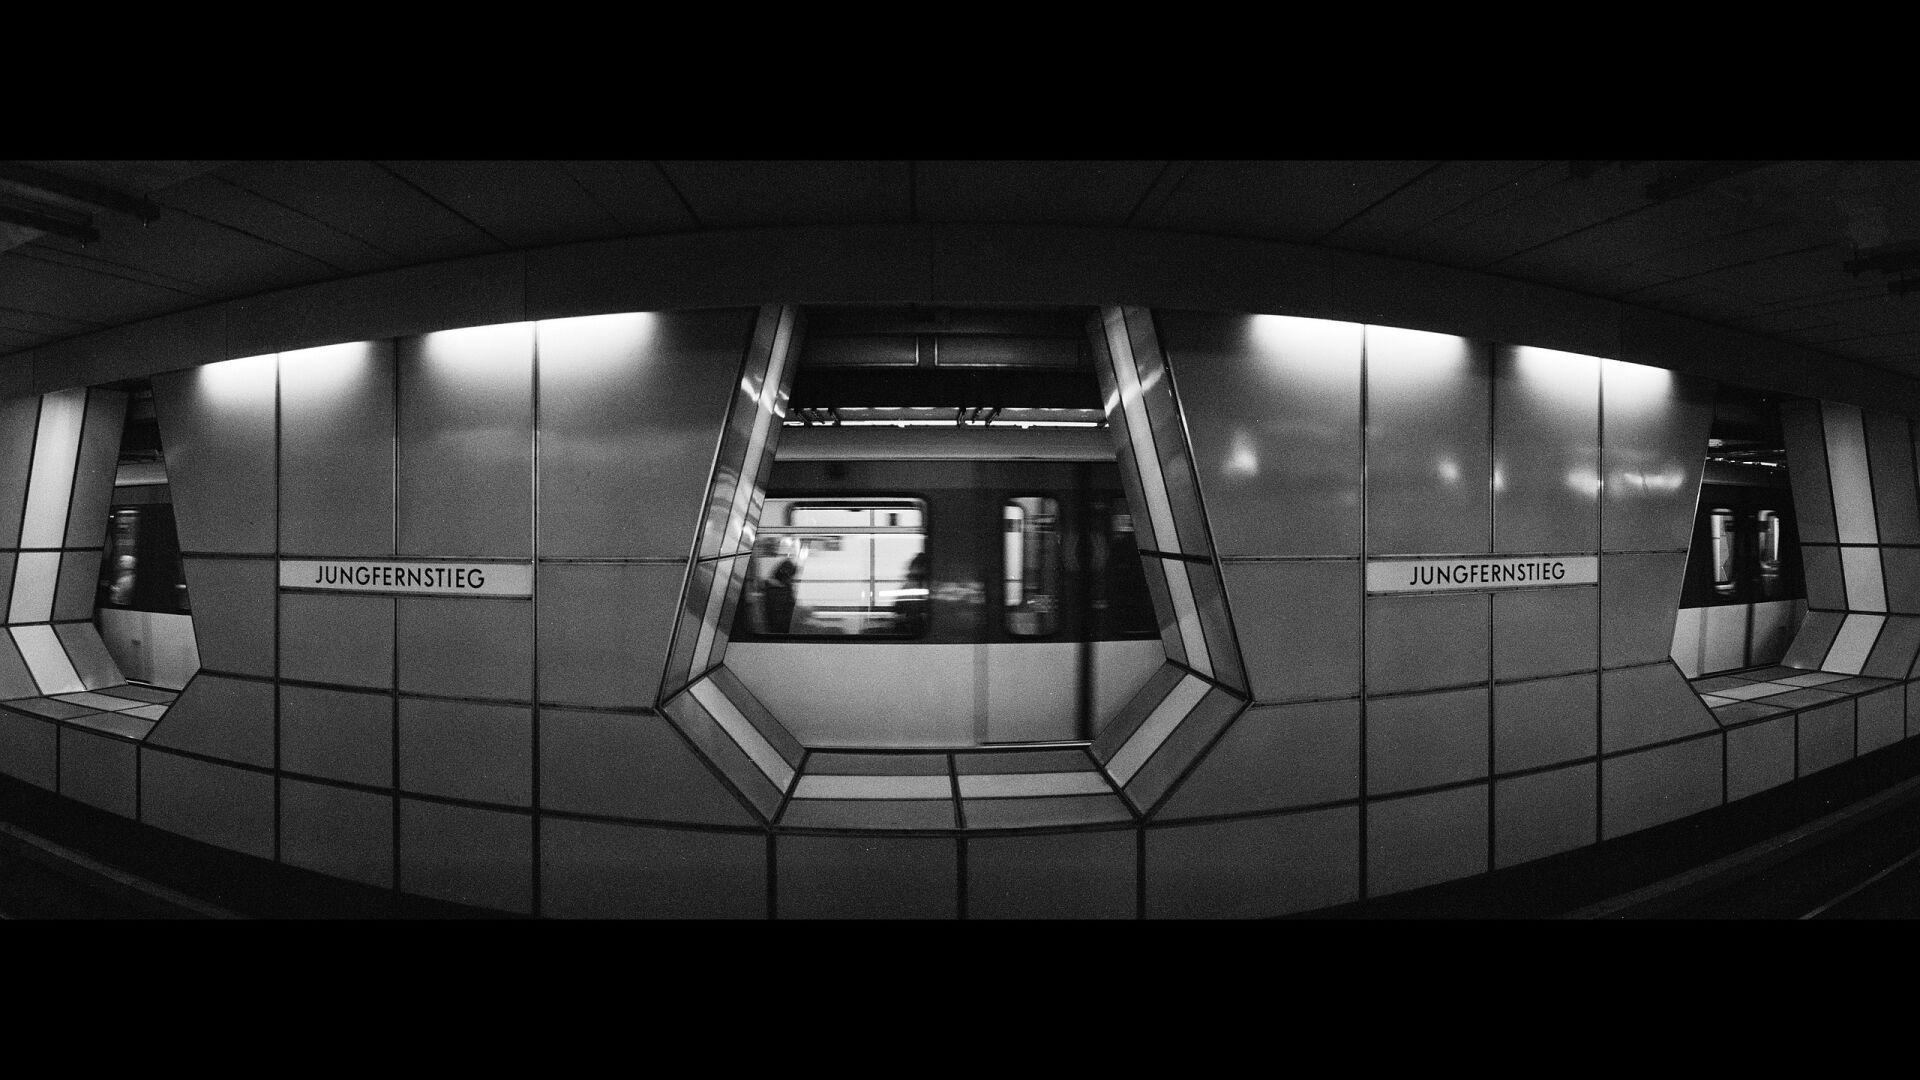 Metro station Jungfernstieg